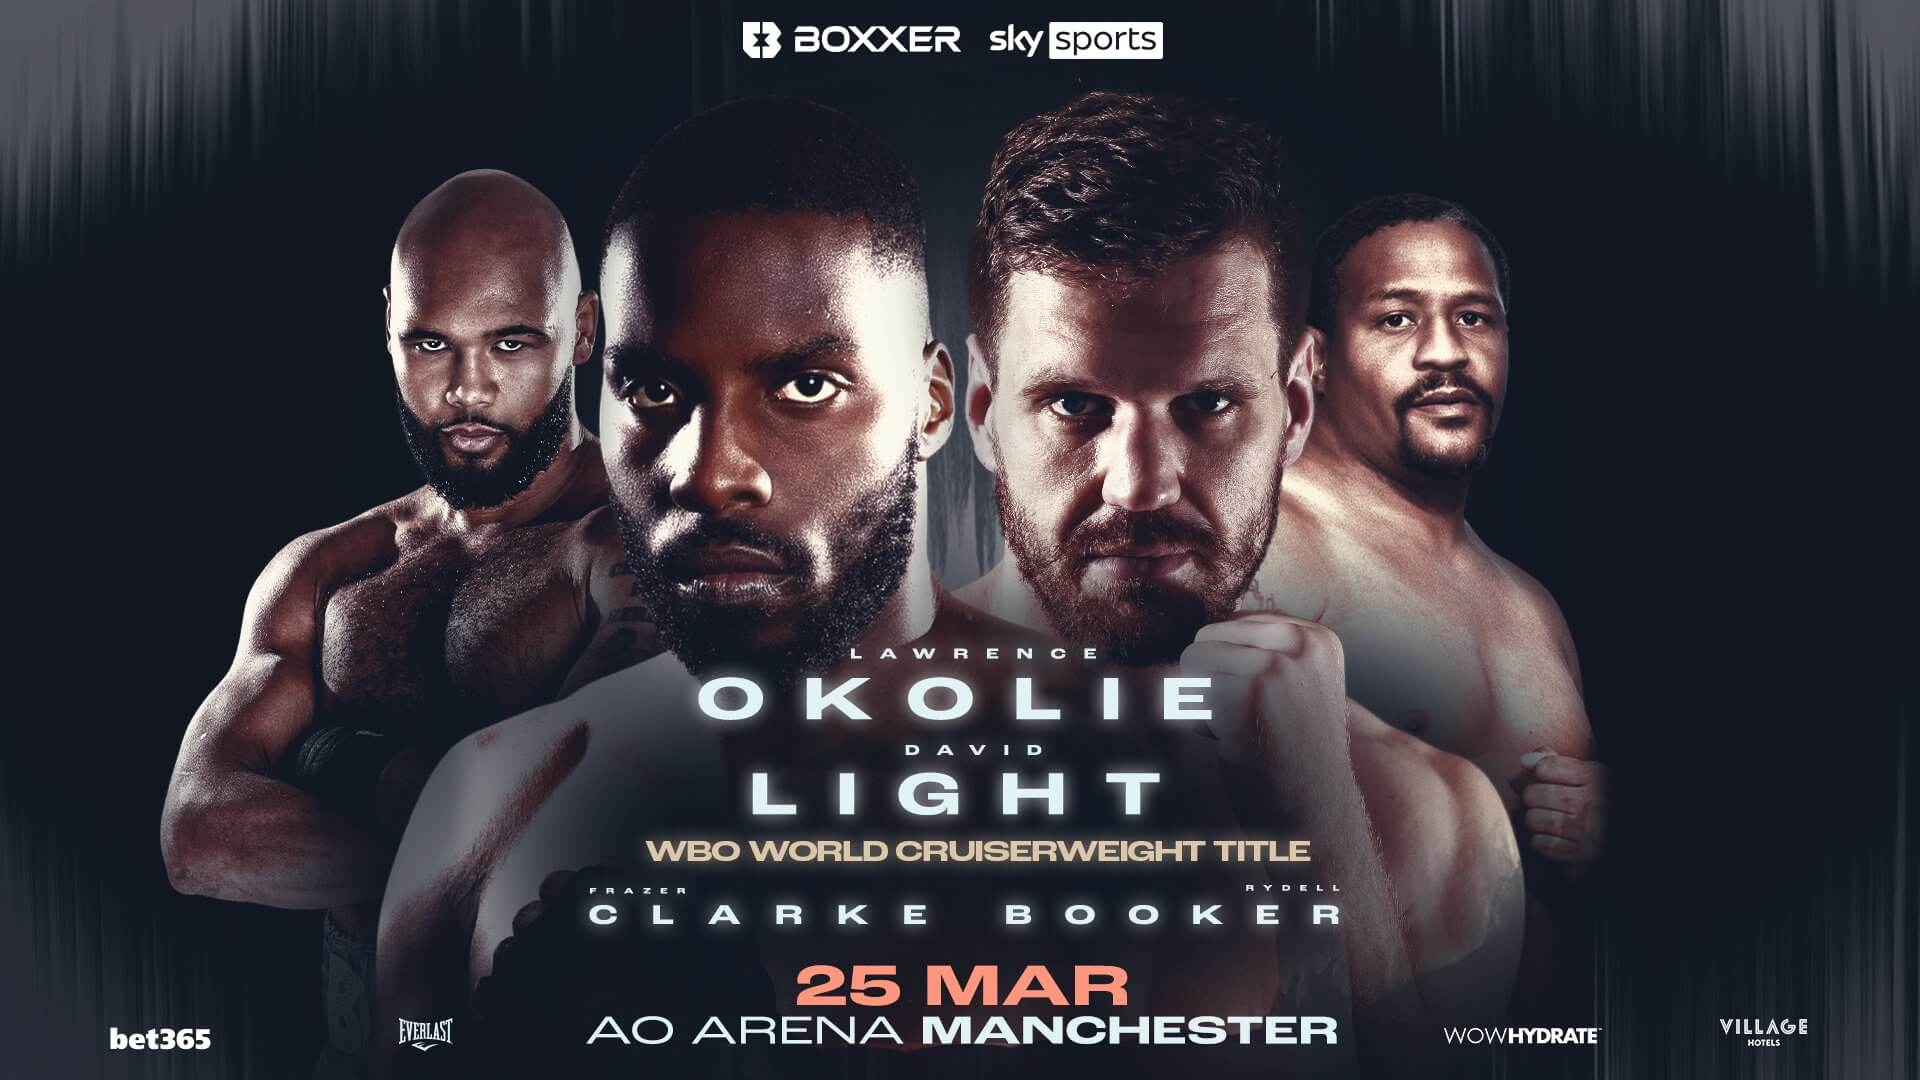 Lawrence Okolie vs. David Light, Saturday March 25 at AO Arena, Manchester, United Kingdom